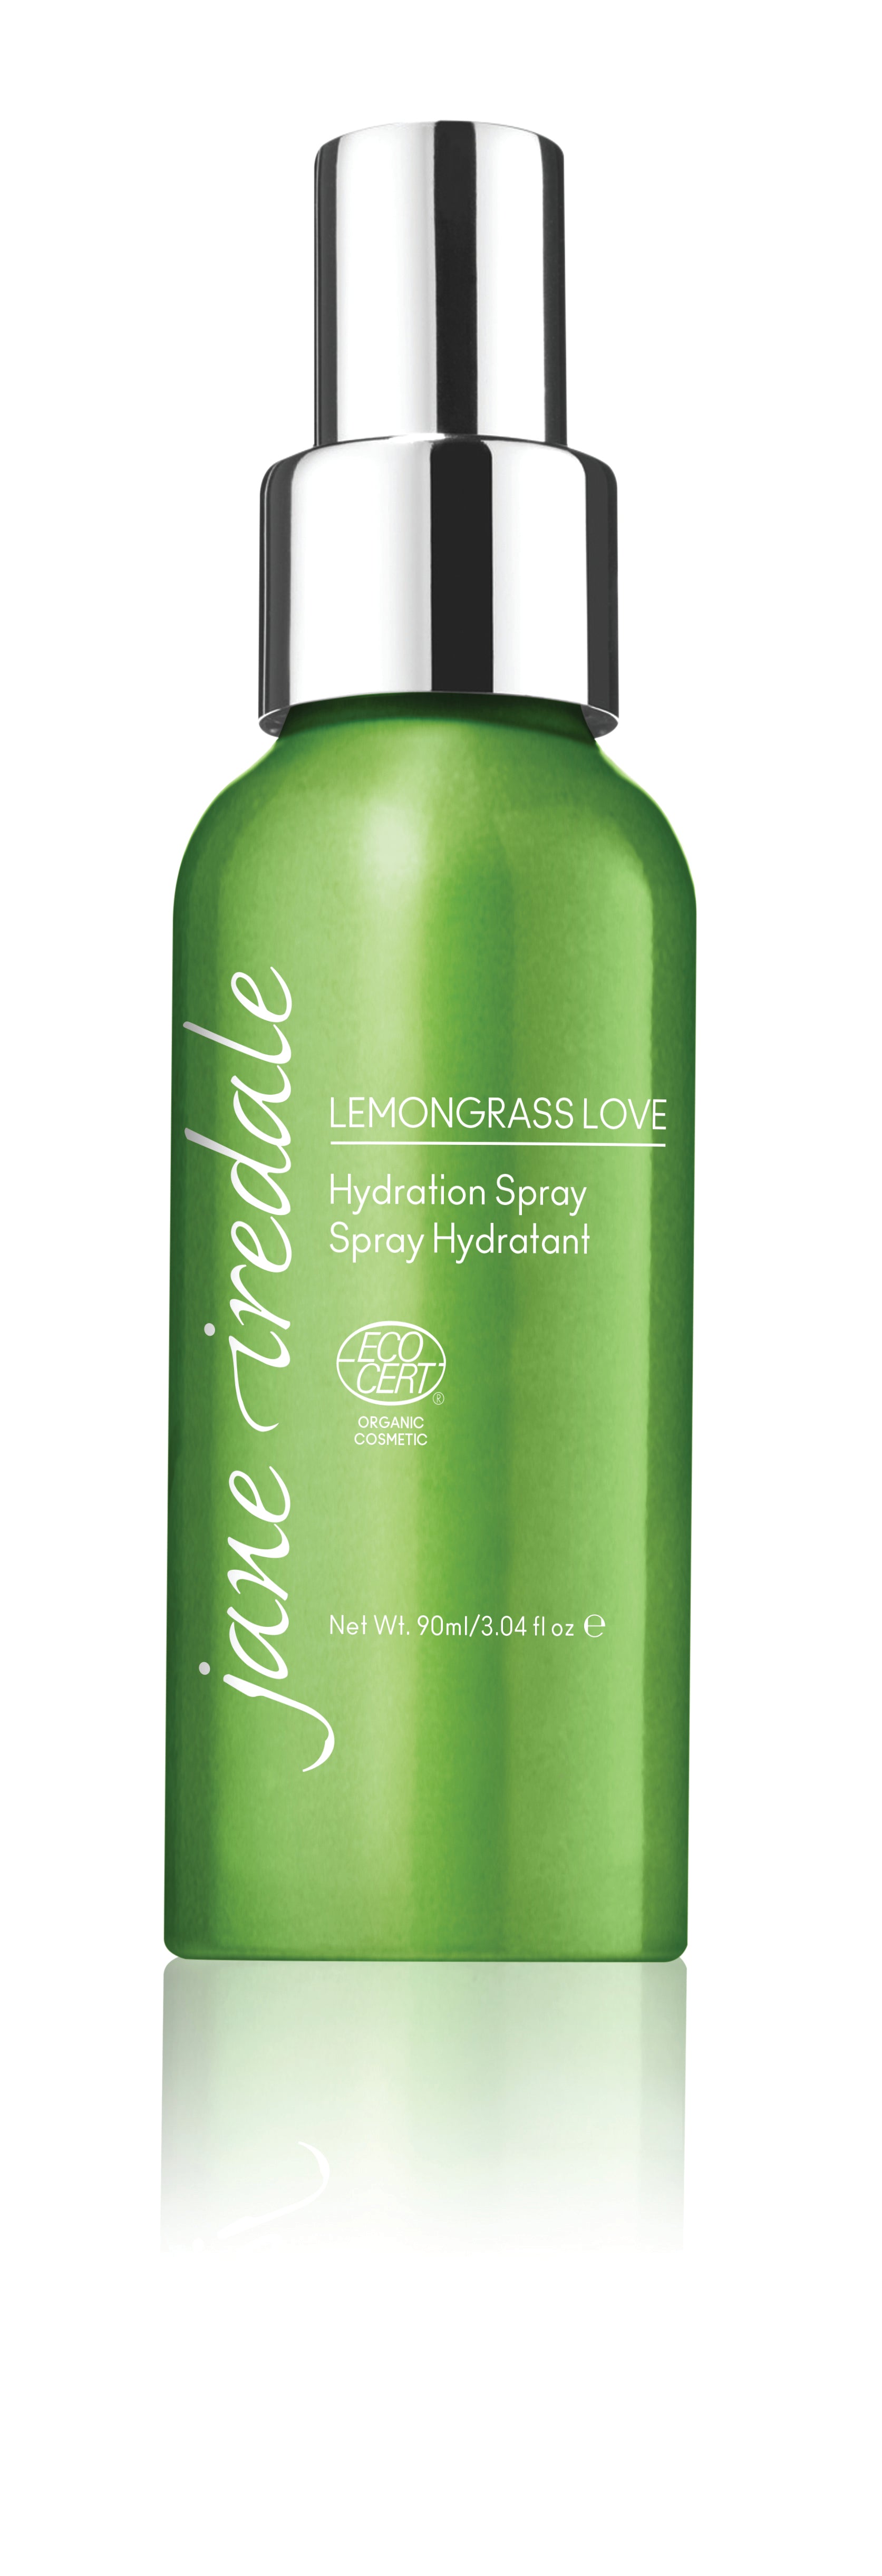 Lemongrass Love Hydration Spray by Jane Iredale